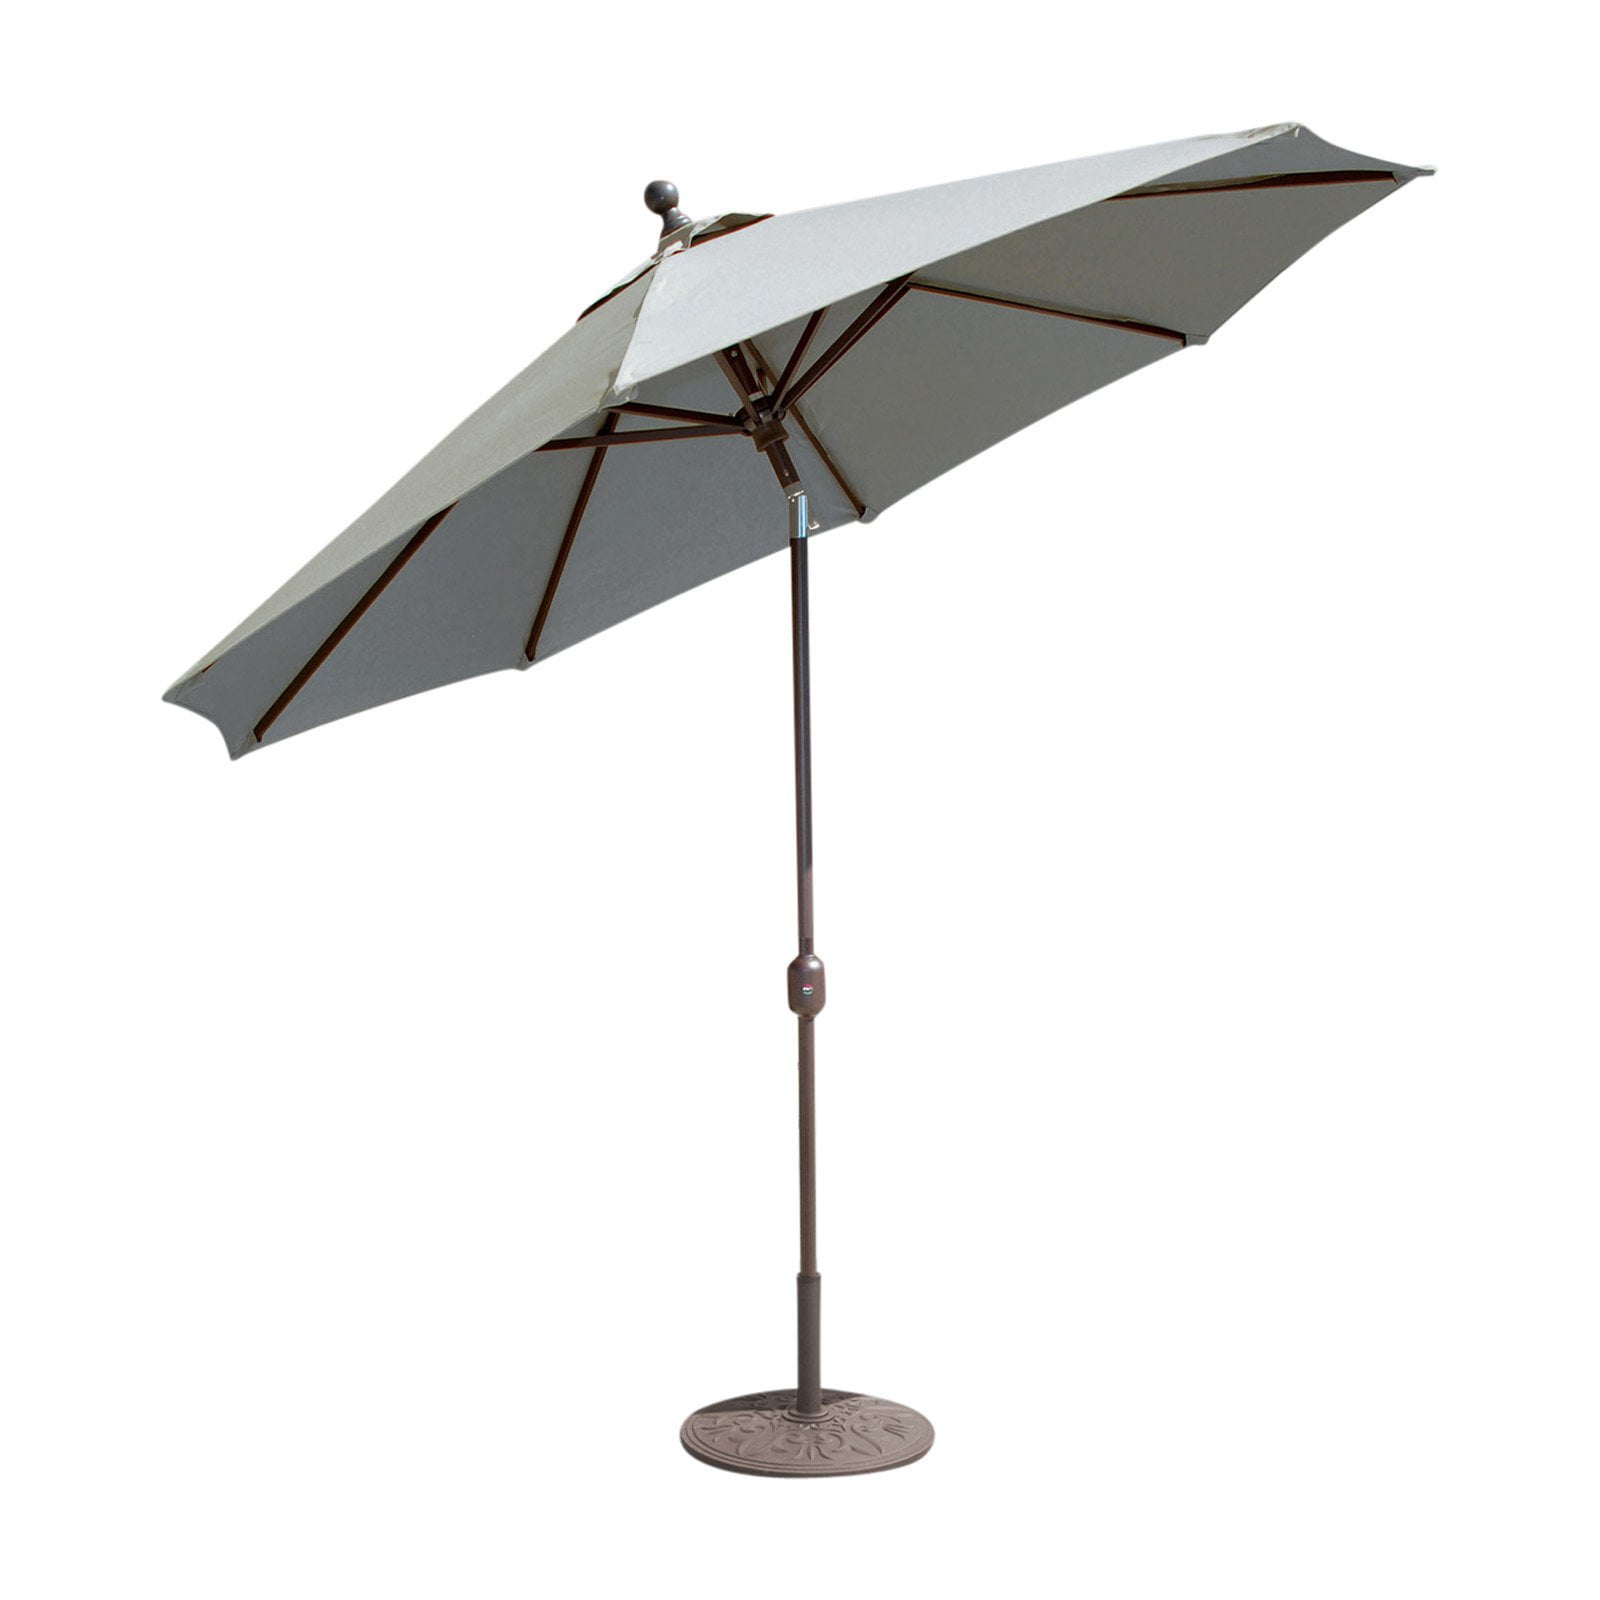 7 FT Diamond Shaped Top Umbrella W/ Tilt Carry Bag 98% UVA Rays Protection NEW 